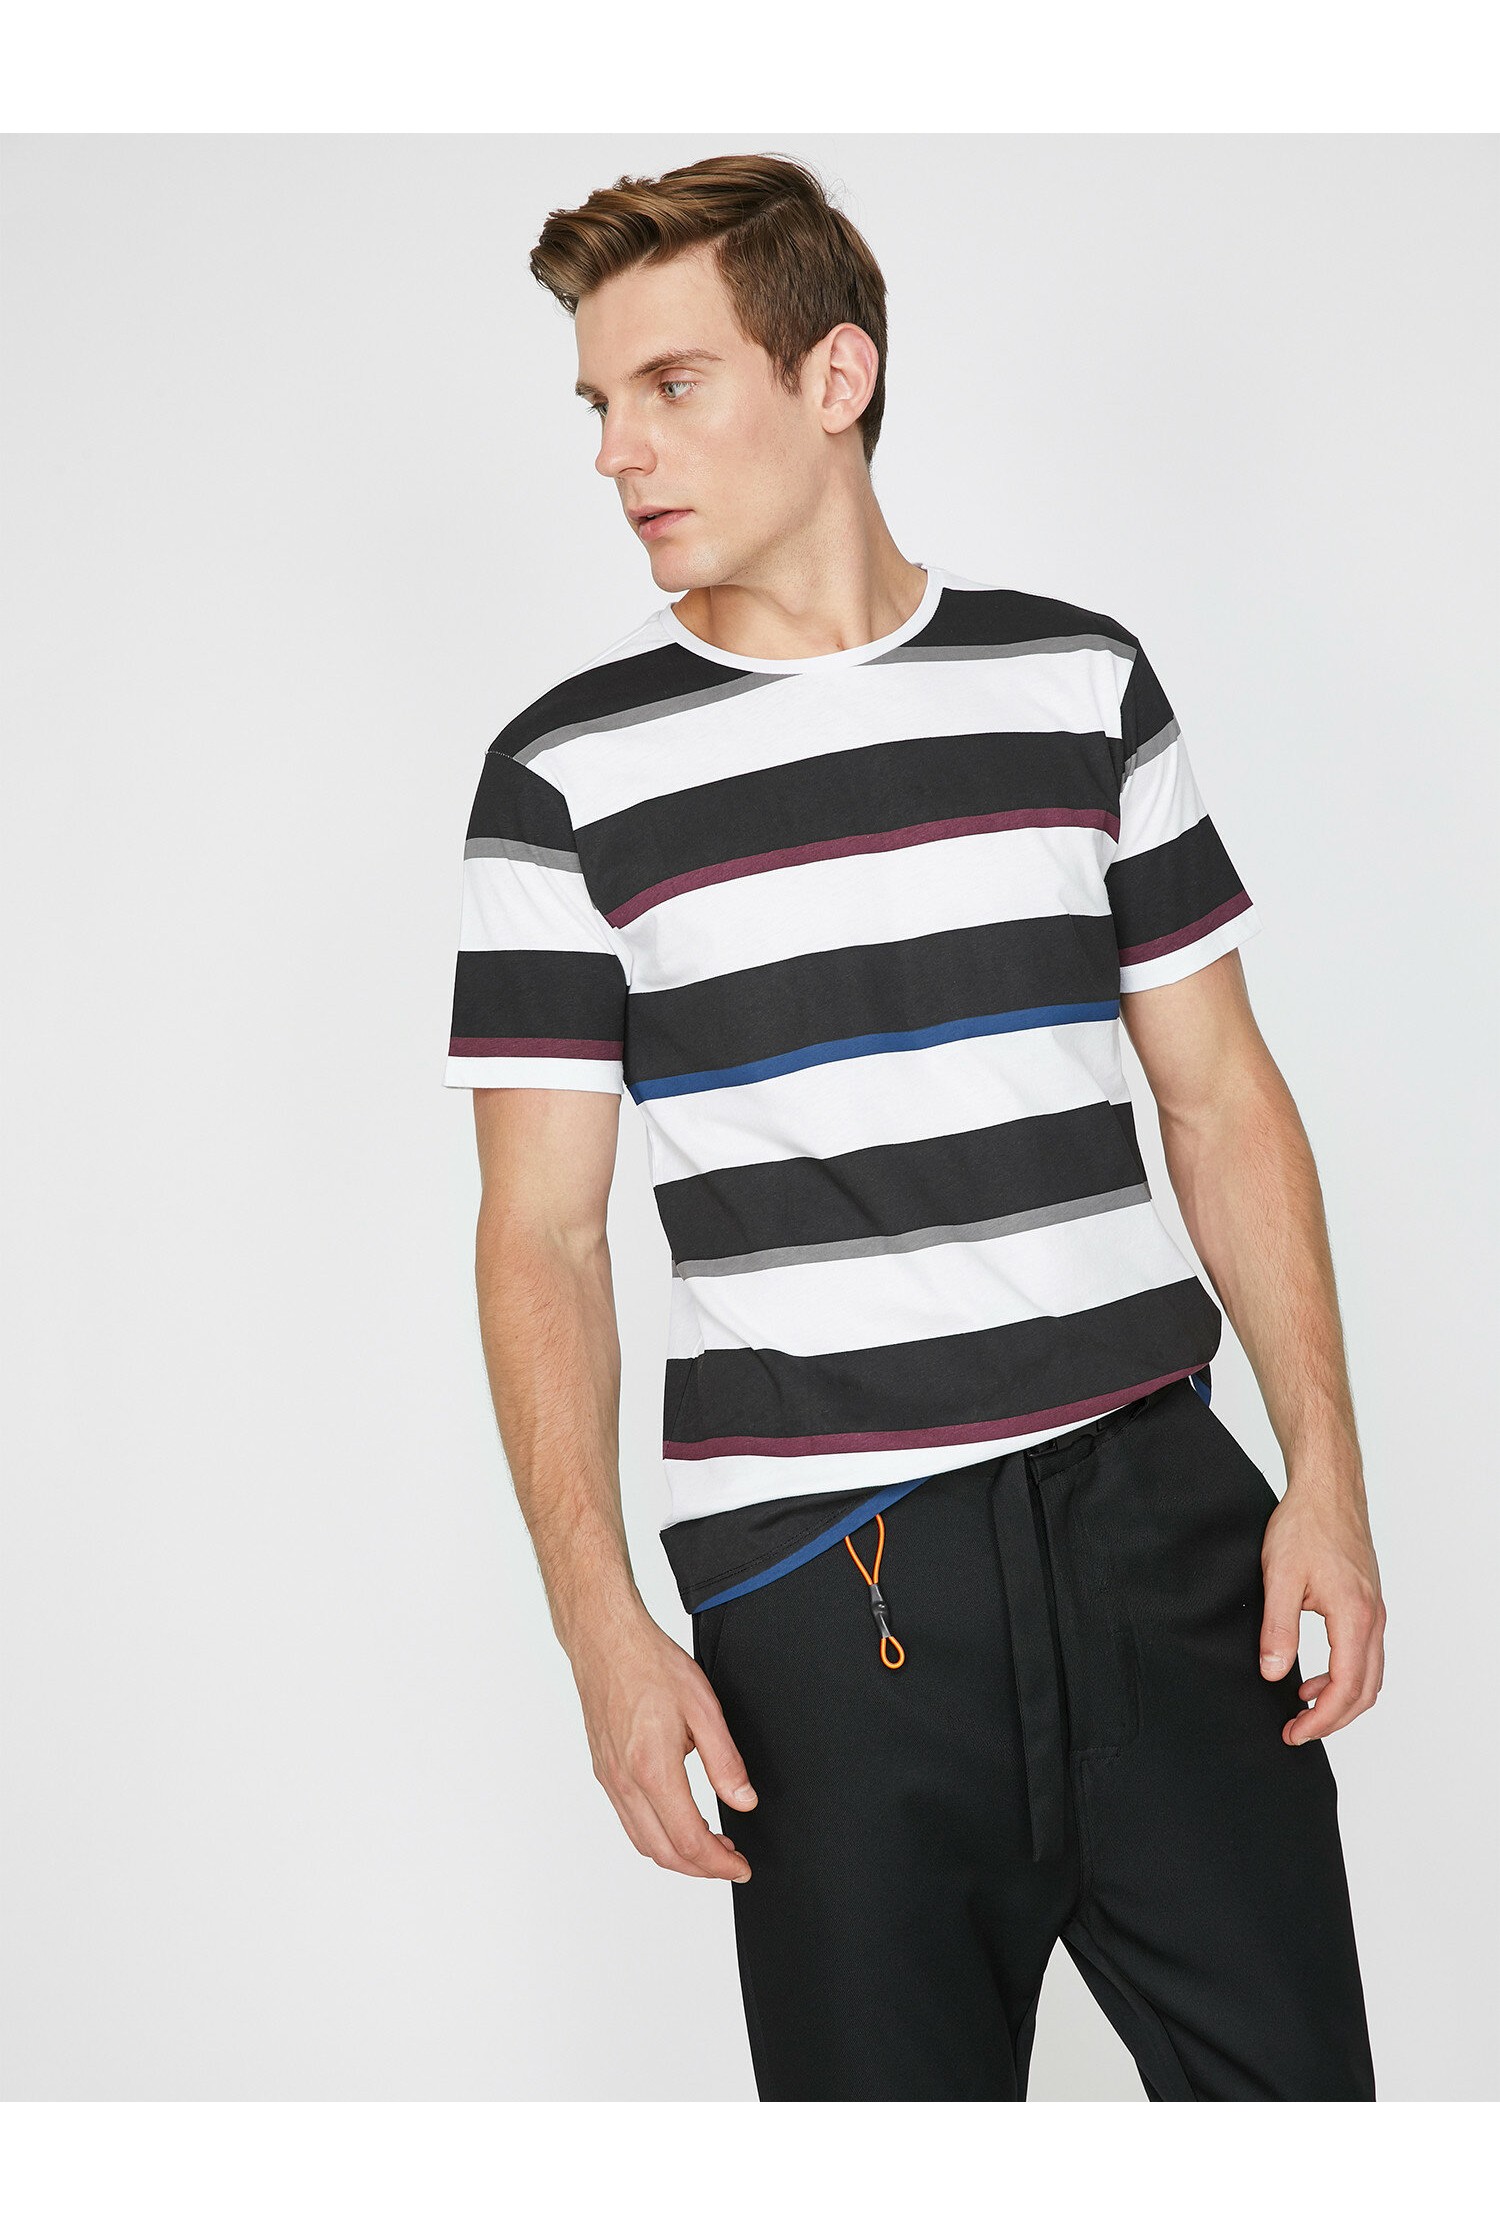 men's striped T-shirt